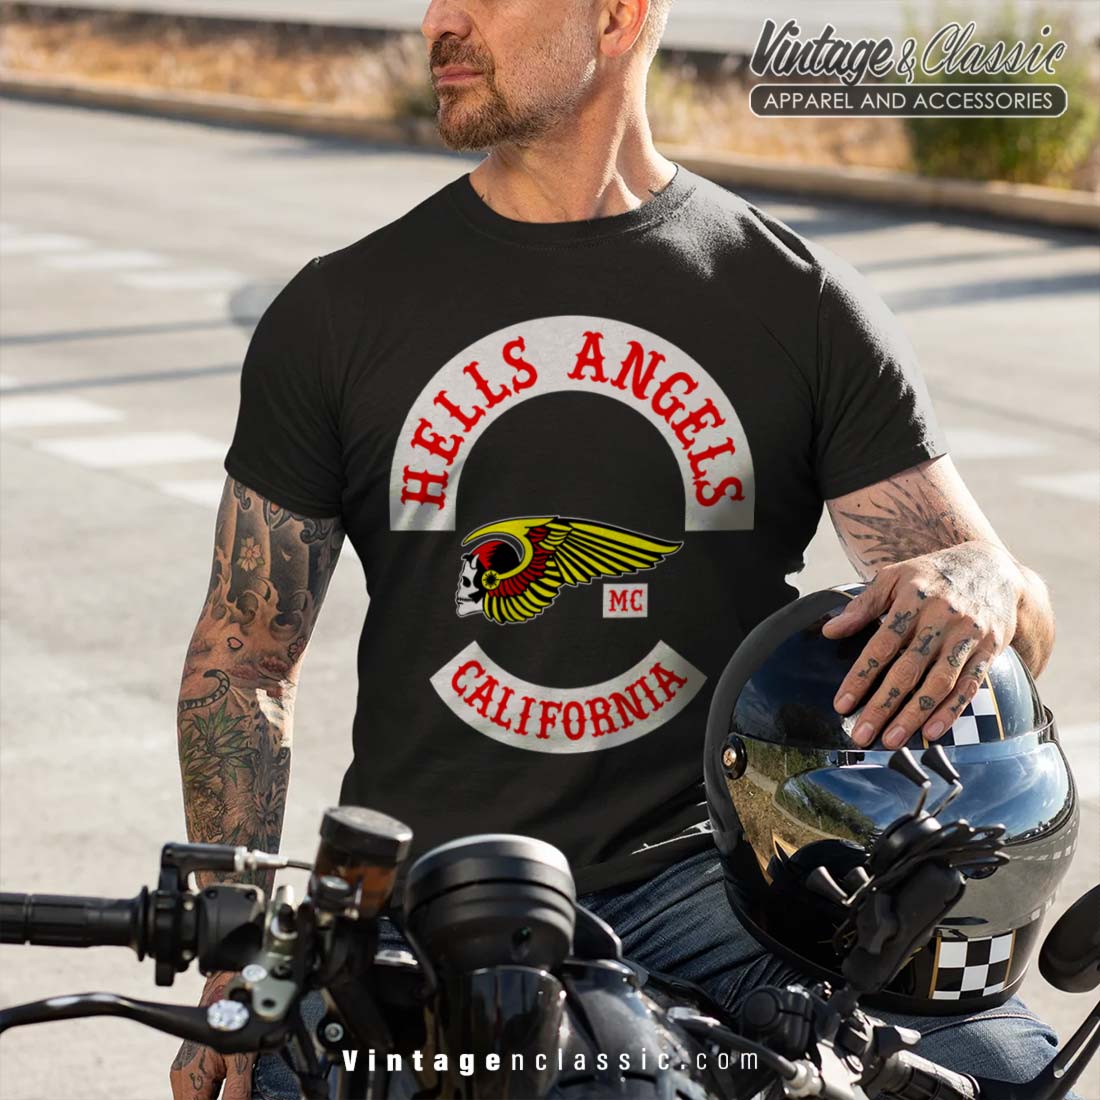 https://vintagenclassic.com/wp-content/uploads/2022/11/Hells-Angels-Mc-California-Biker-T-shirt.jpg